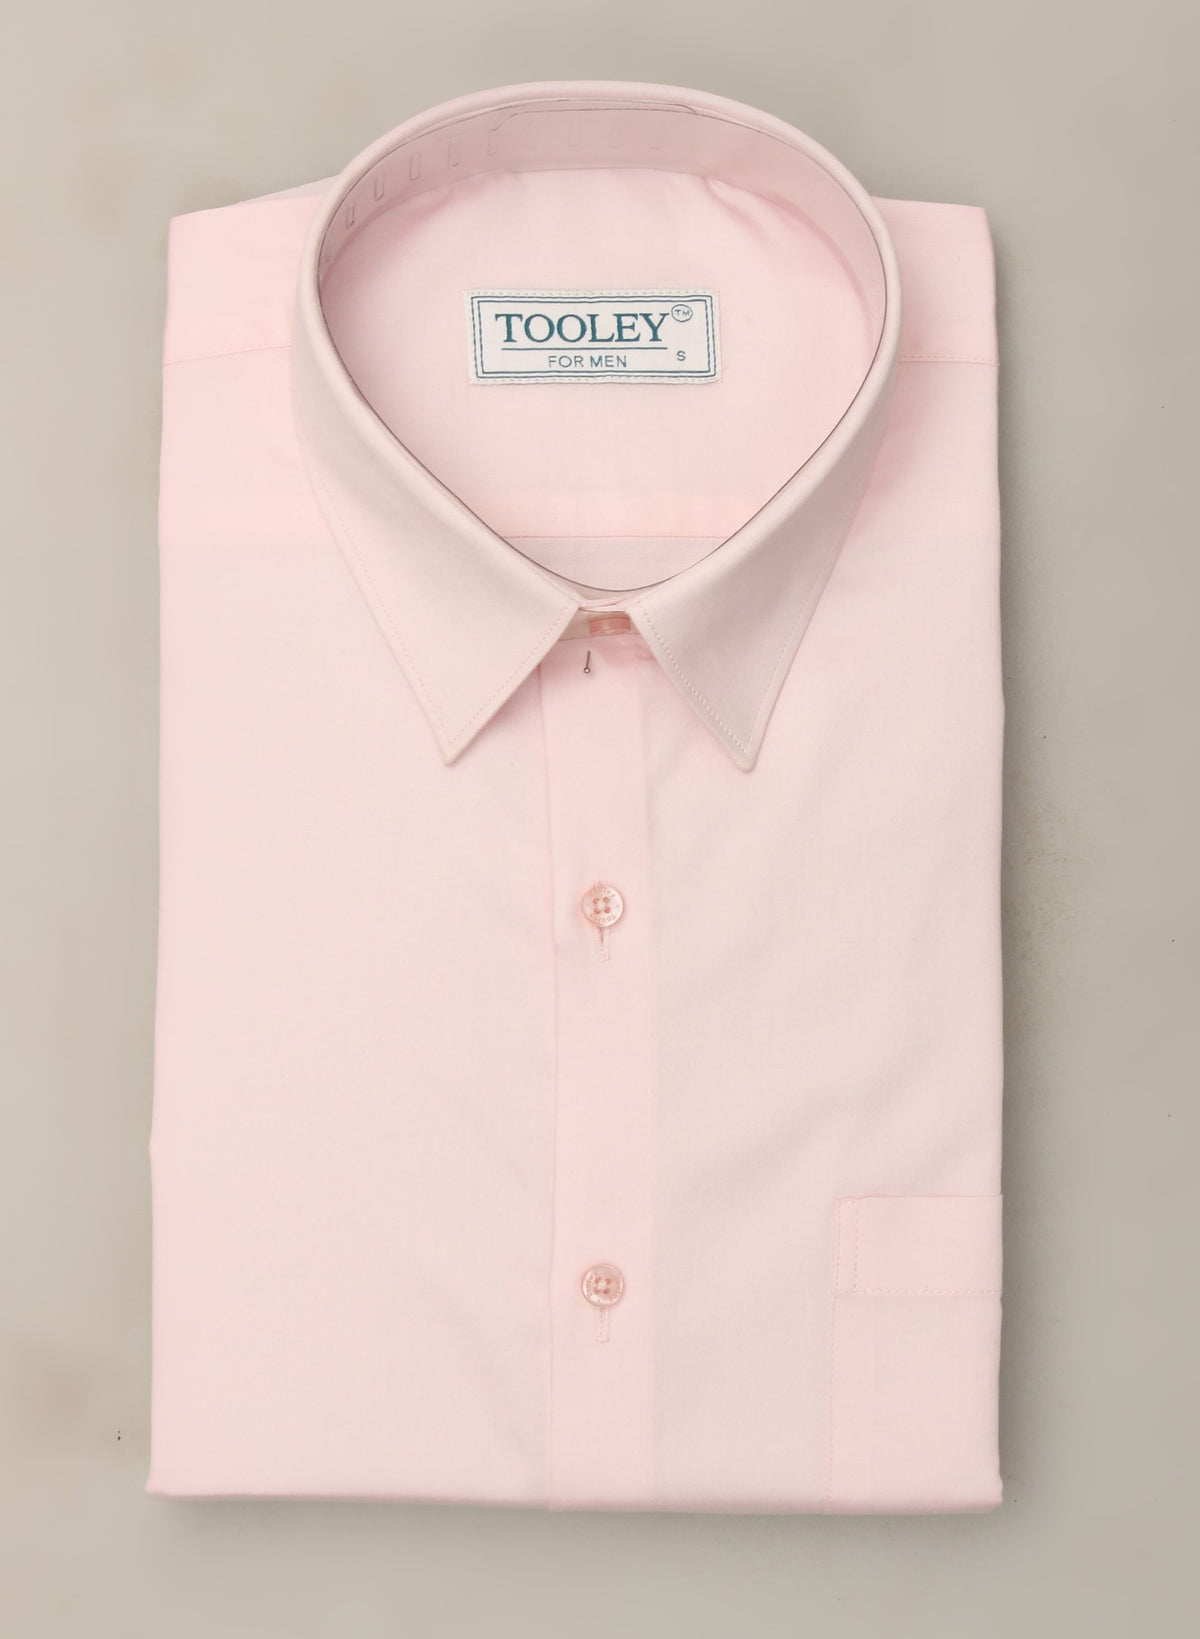 A-Men's Tailored-Fit Oxford Cotton Summer Light Pink Formal Shirt Code-1084